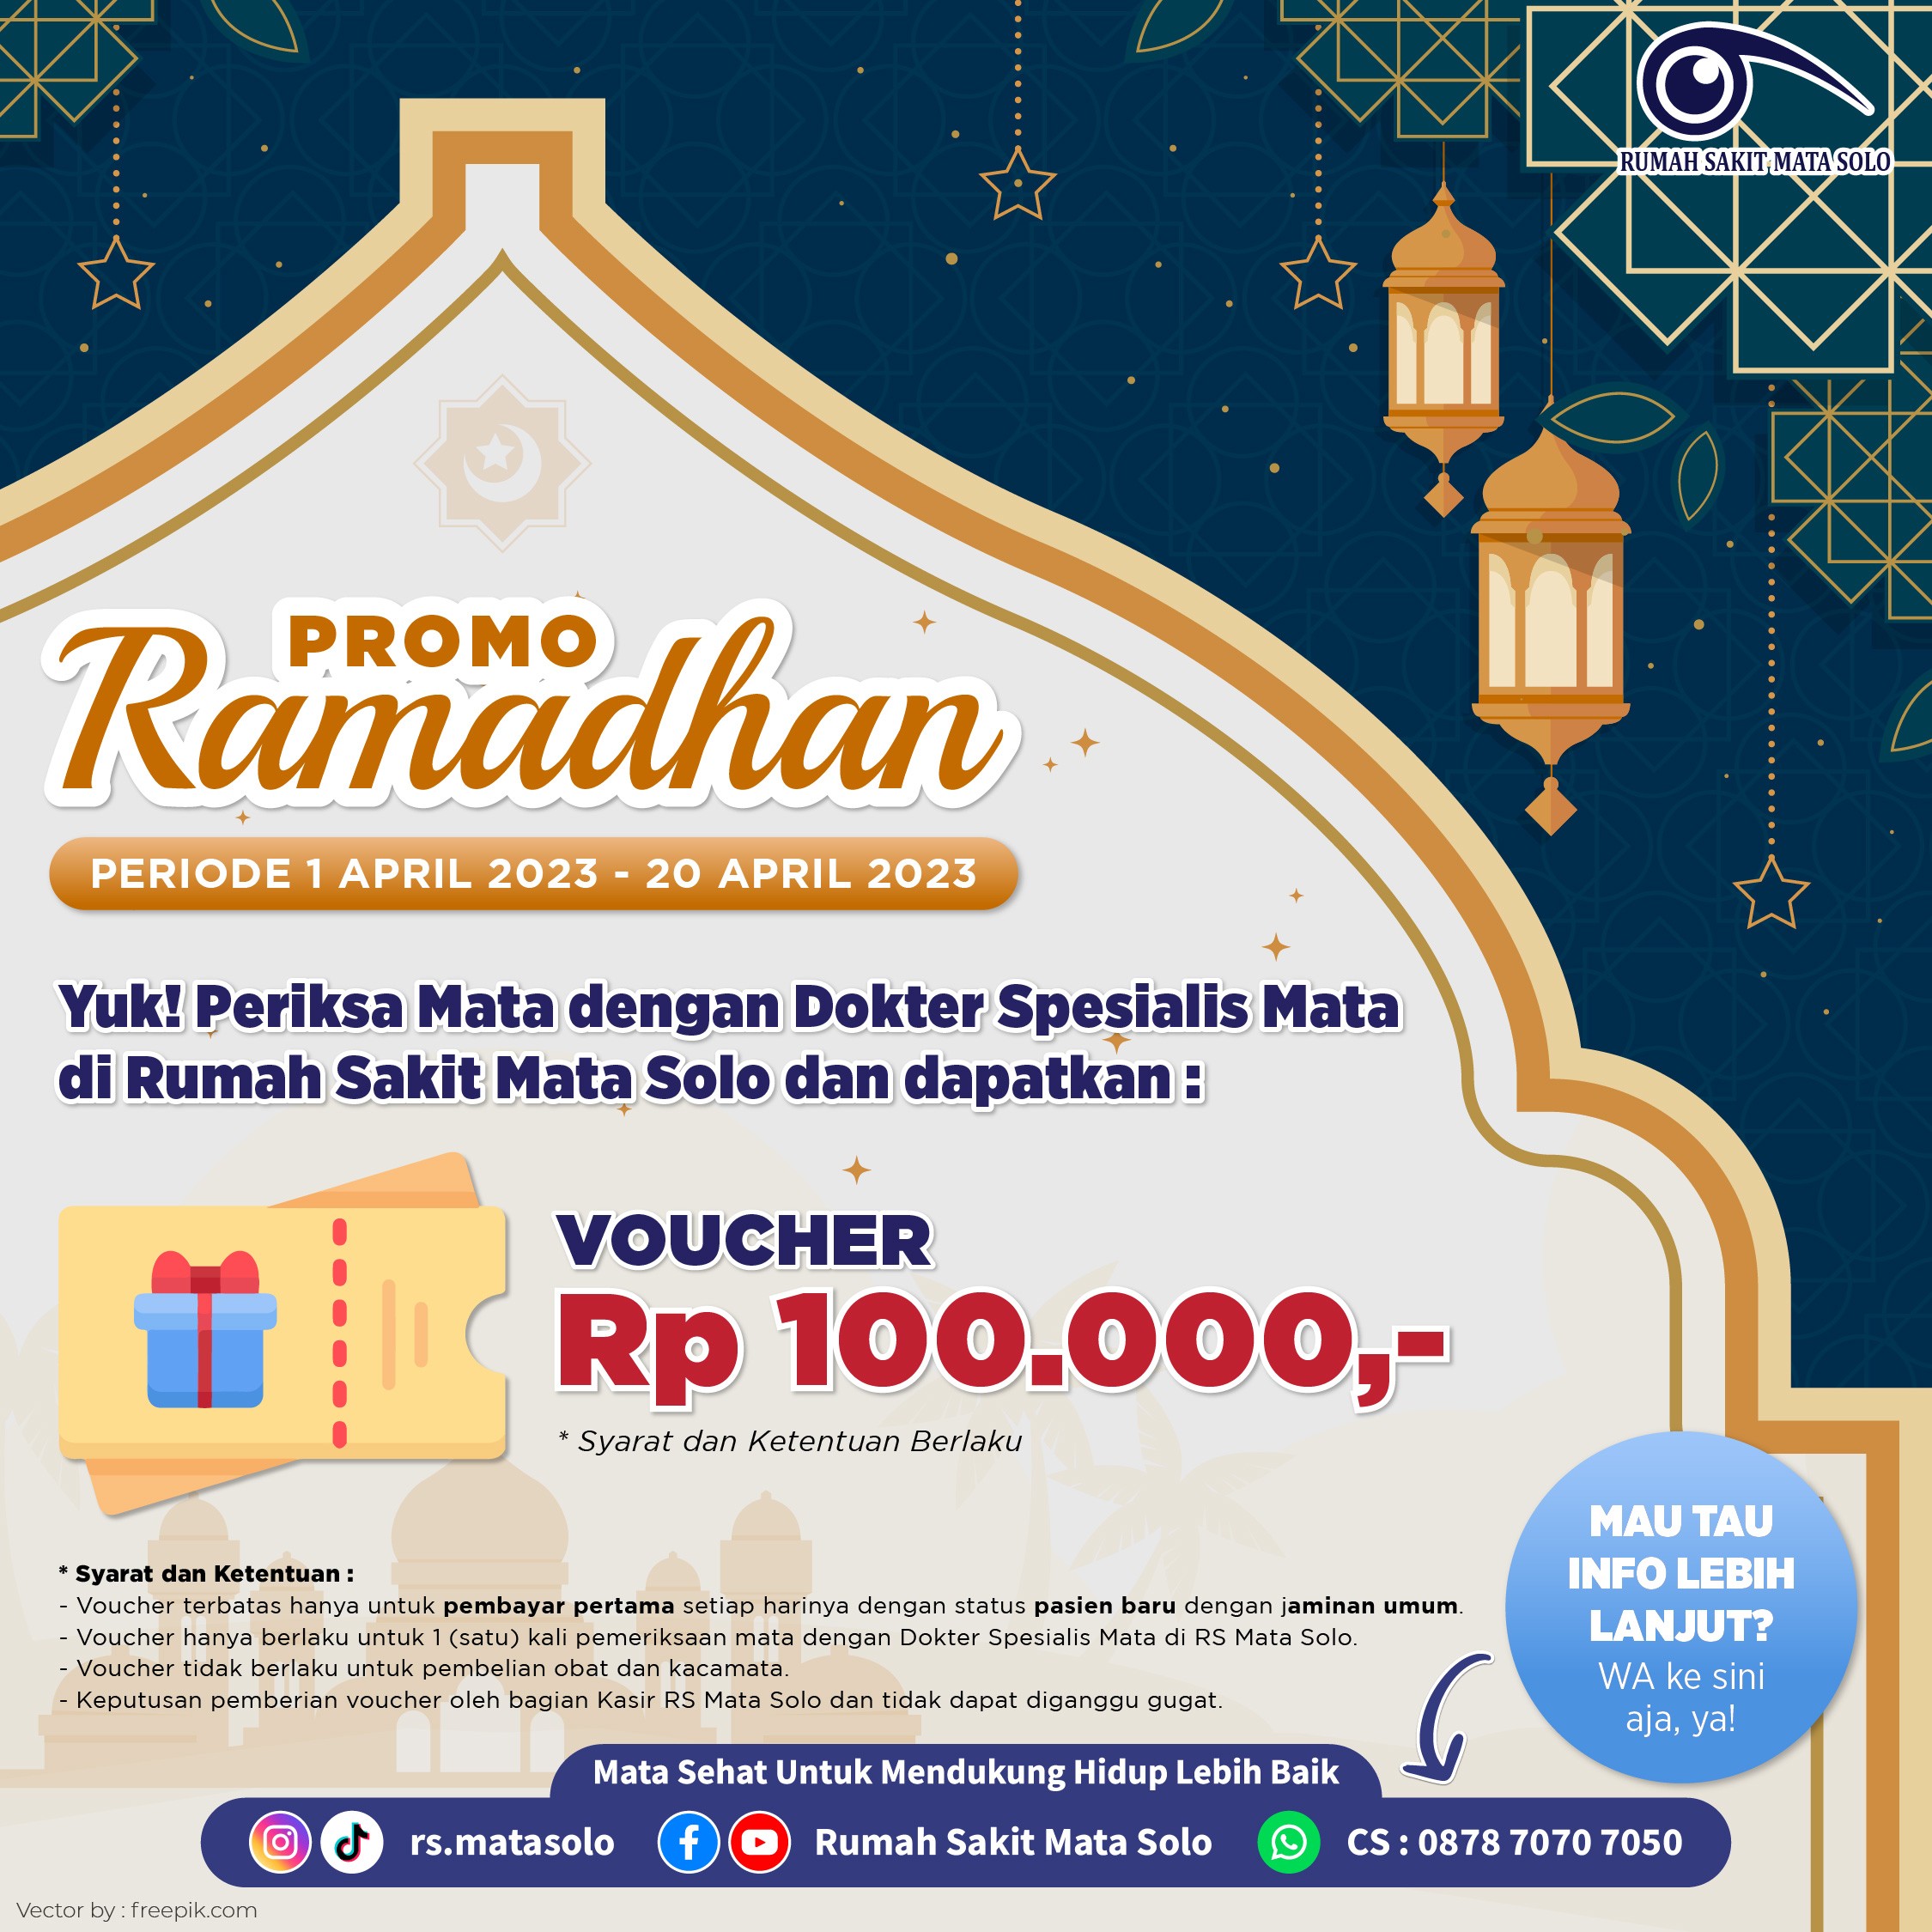 Promo Ramadhan 2023 Rumah Sakit Mata Solo